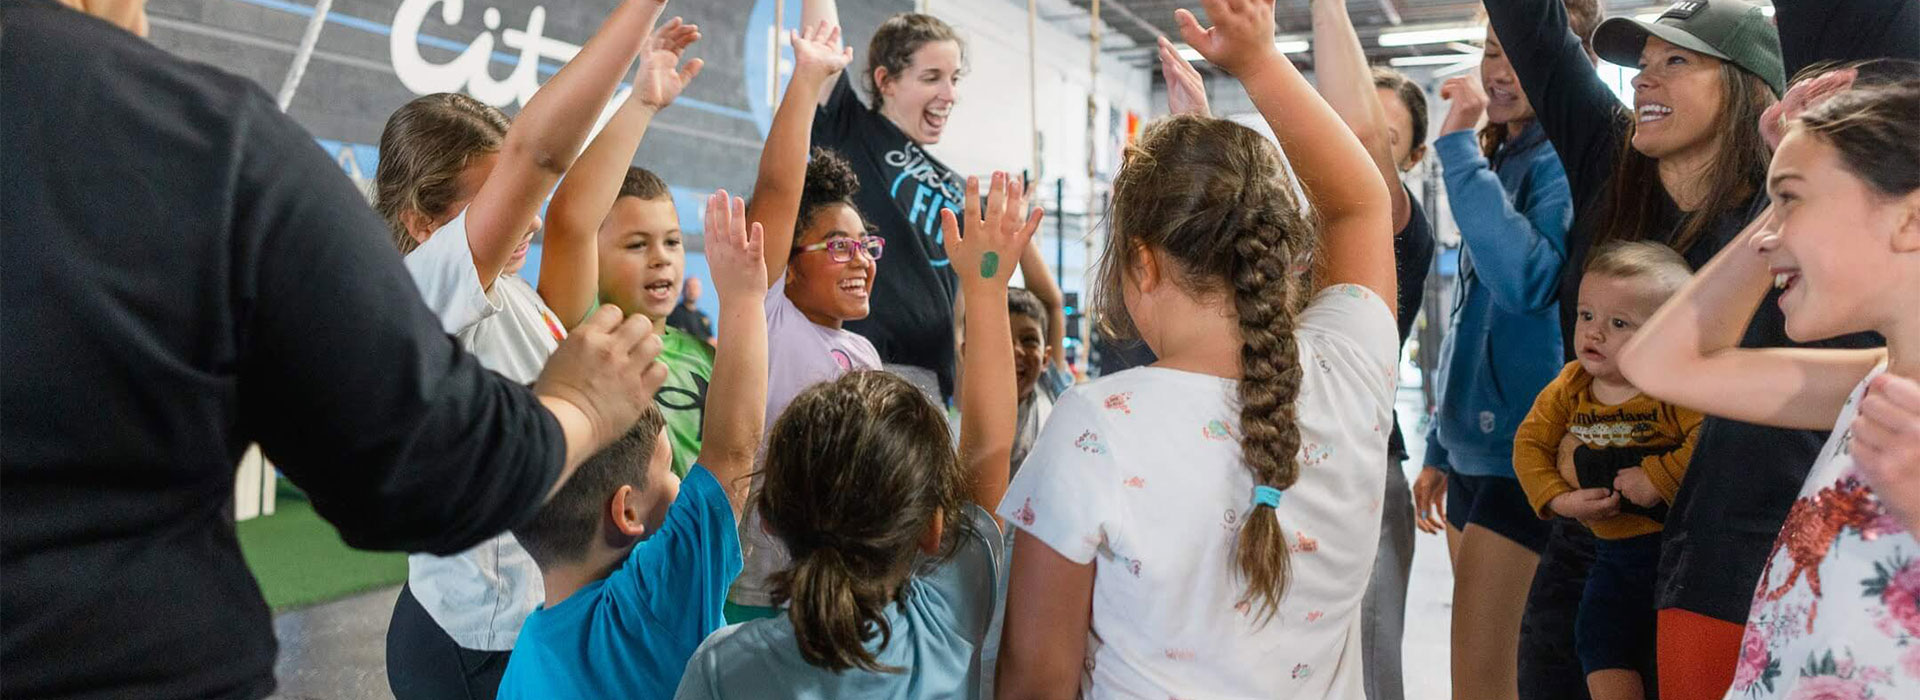 CrossFit Kids Program In Manchester, Connecticut